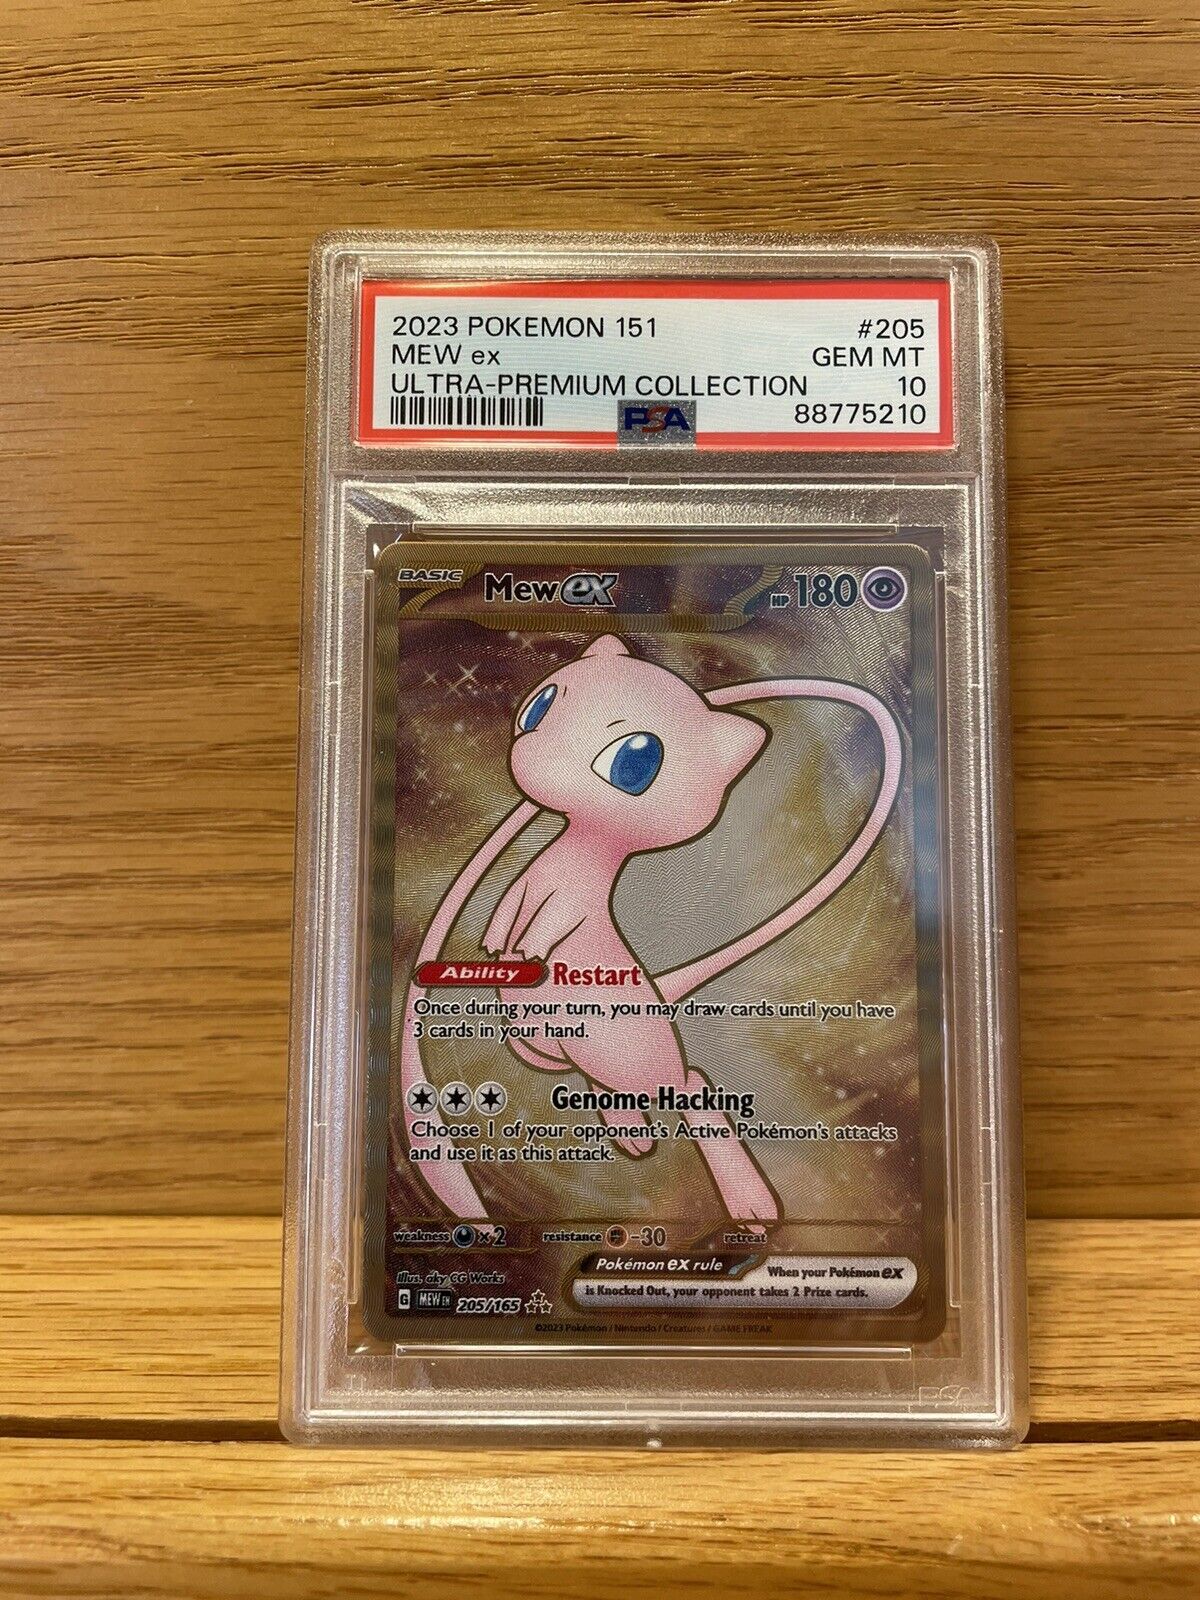 PSA 10 Mew ex 205/165 Pokemon 151 Gold Metal Ultra Premium Collection Card TCG